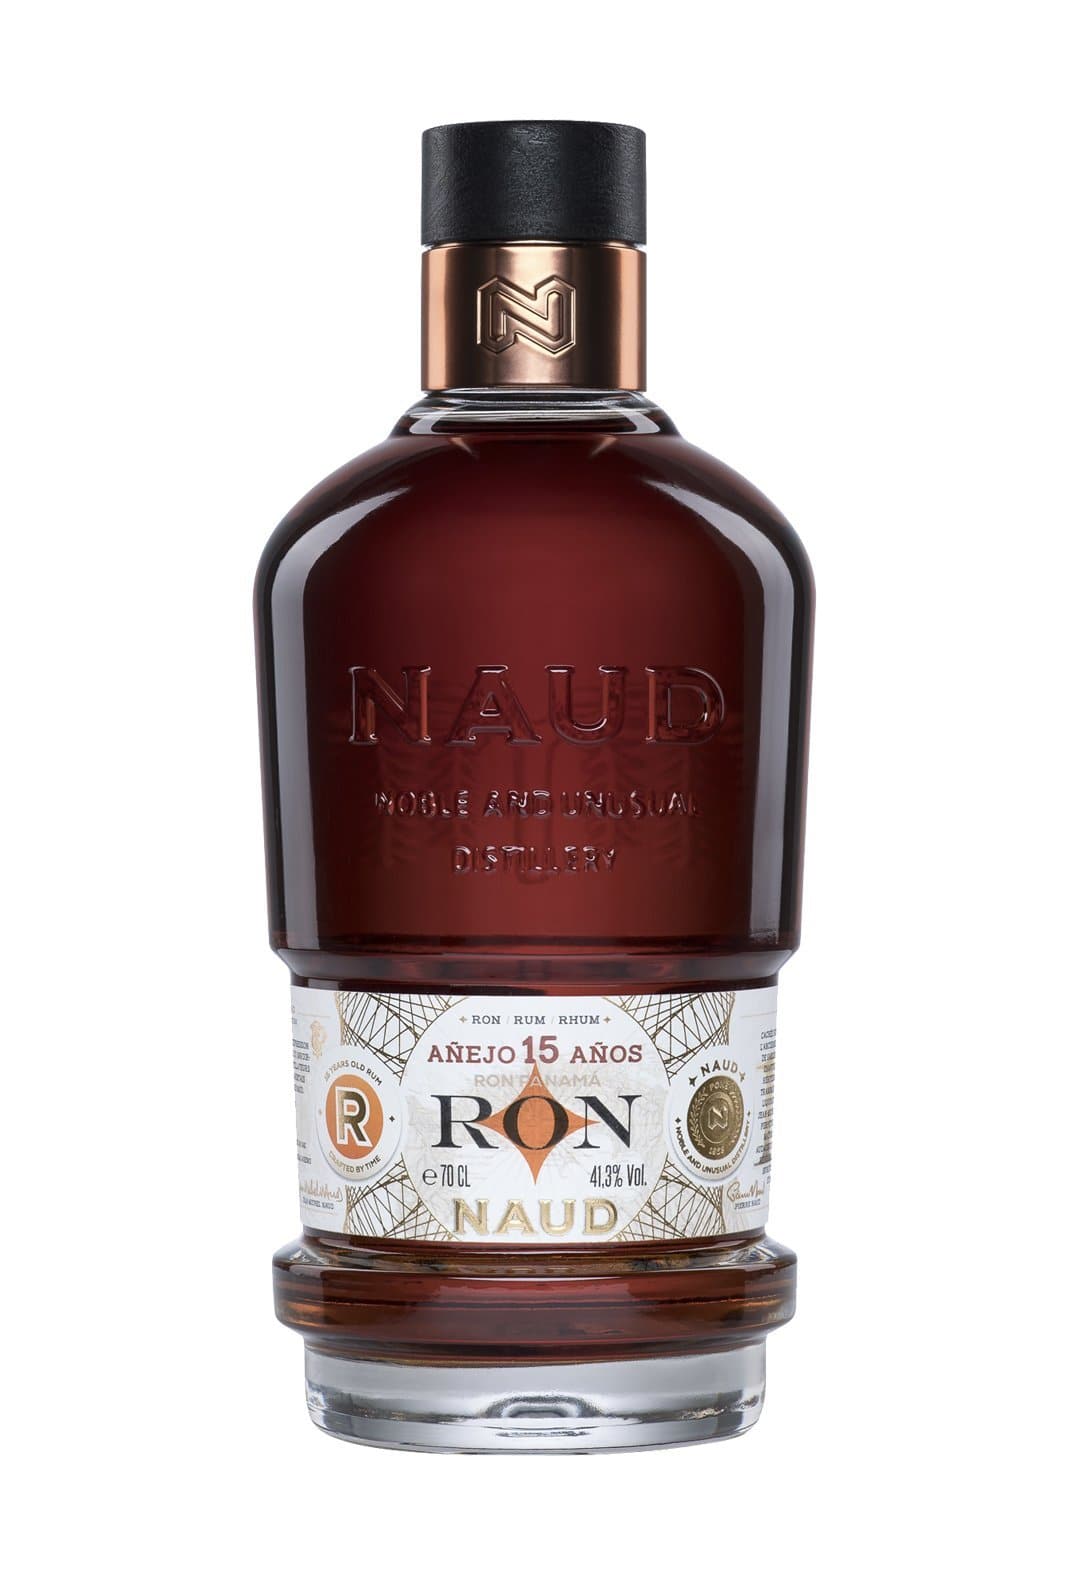 Naud Rum Panama 15 years 41.3% 700ml | Rum | Shop online at Spirits of France